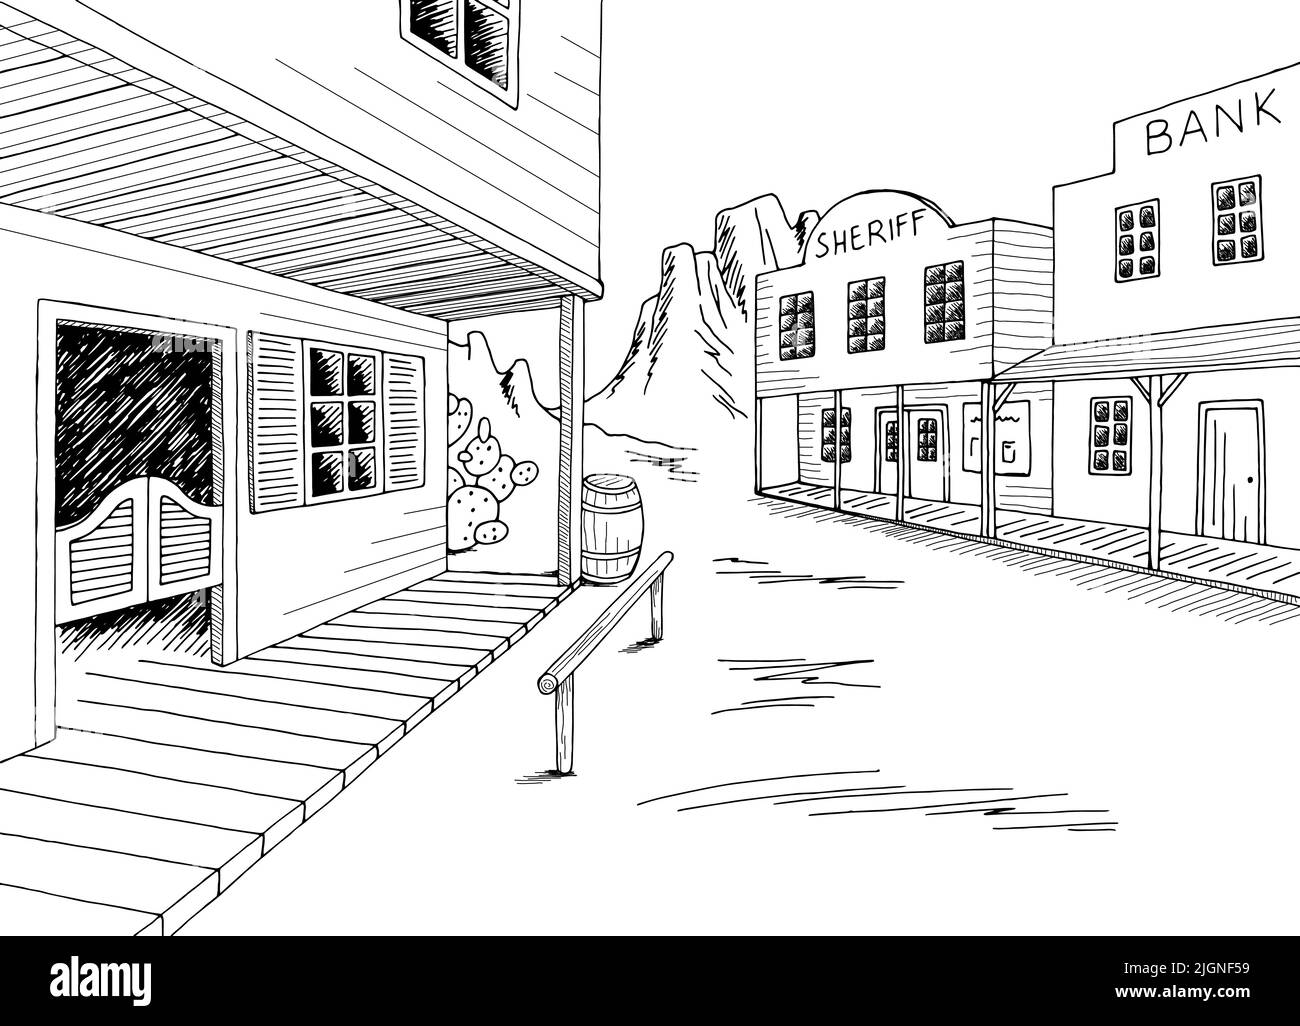 Wild West Street Grafik schwarz weiß Prärie Landschaft Skizze Illustration Vektor Stock Vektor